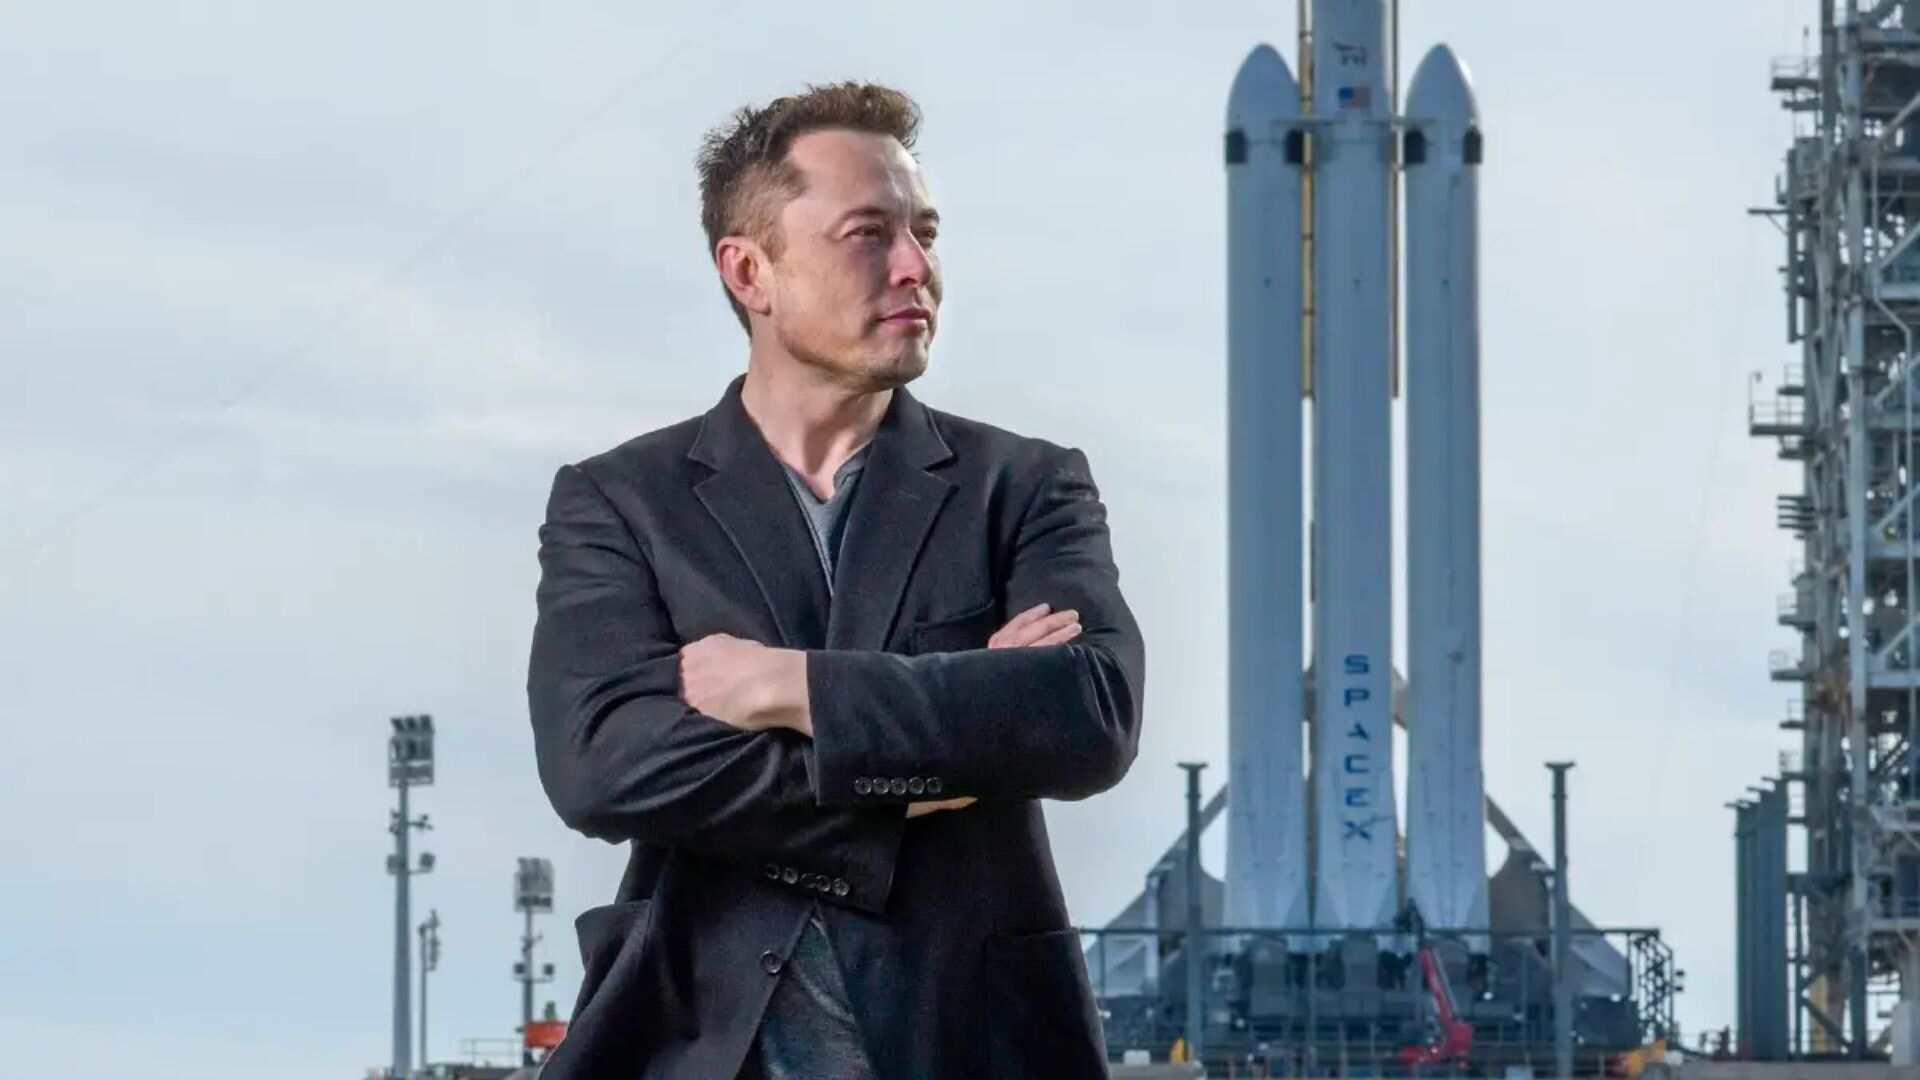 Elon Musk Shares Throwback Photo On 53rd Birthday